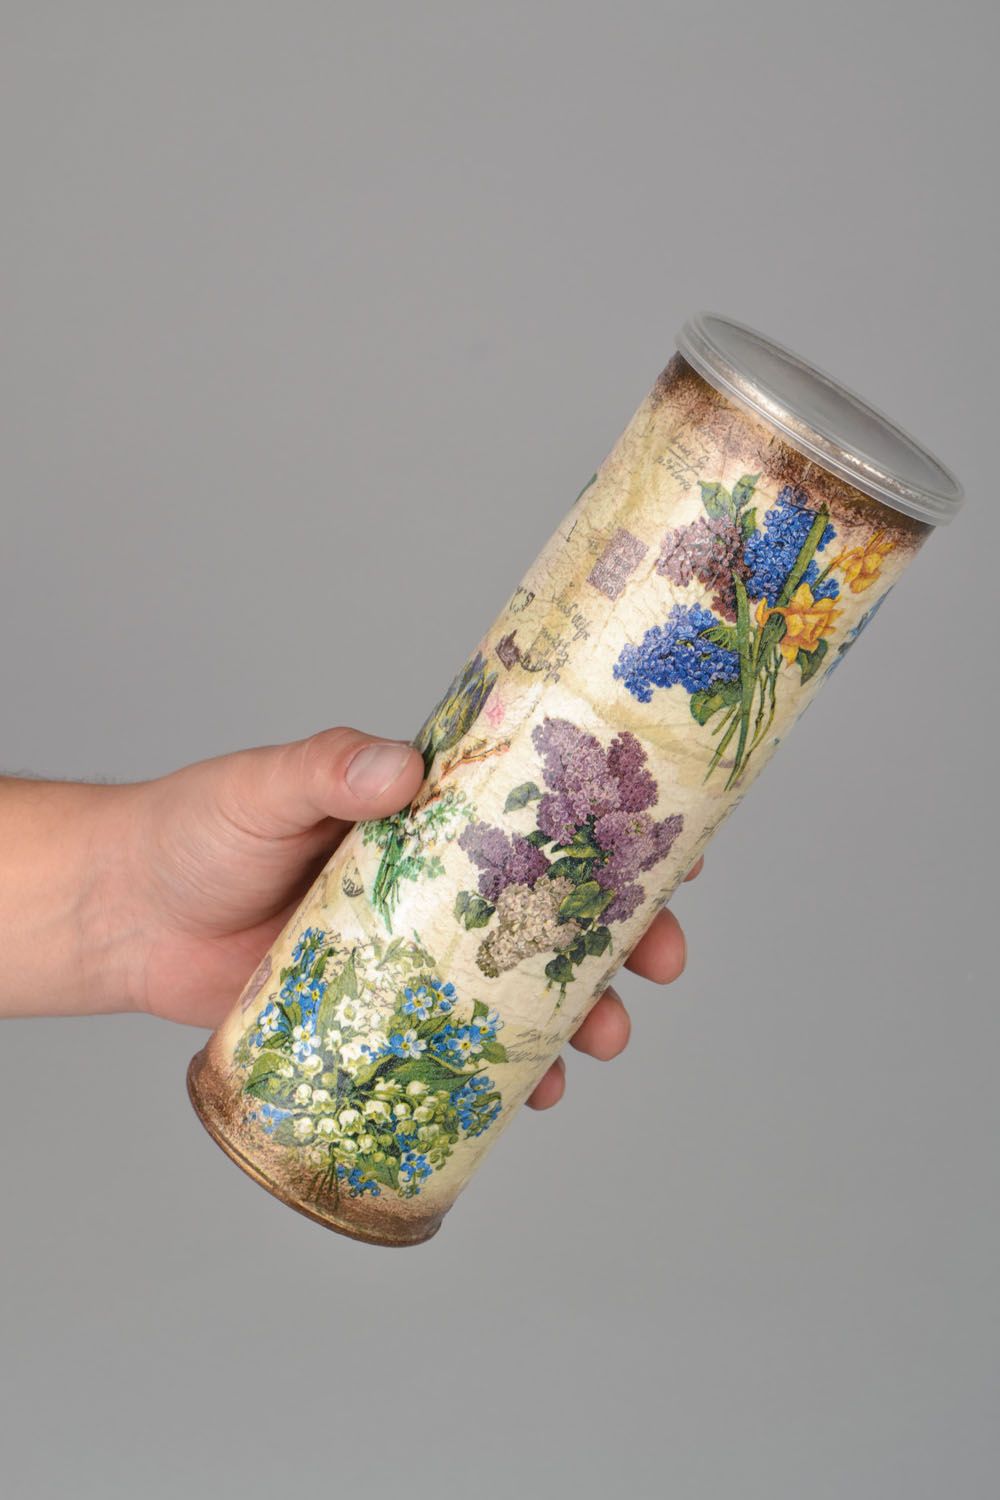 15 oz decorative handmade jar in floral design with lid 0,15 lb photo 1